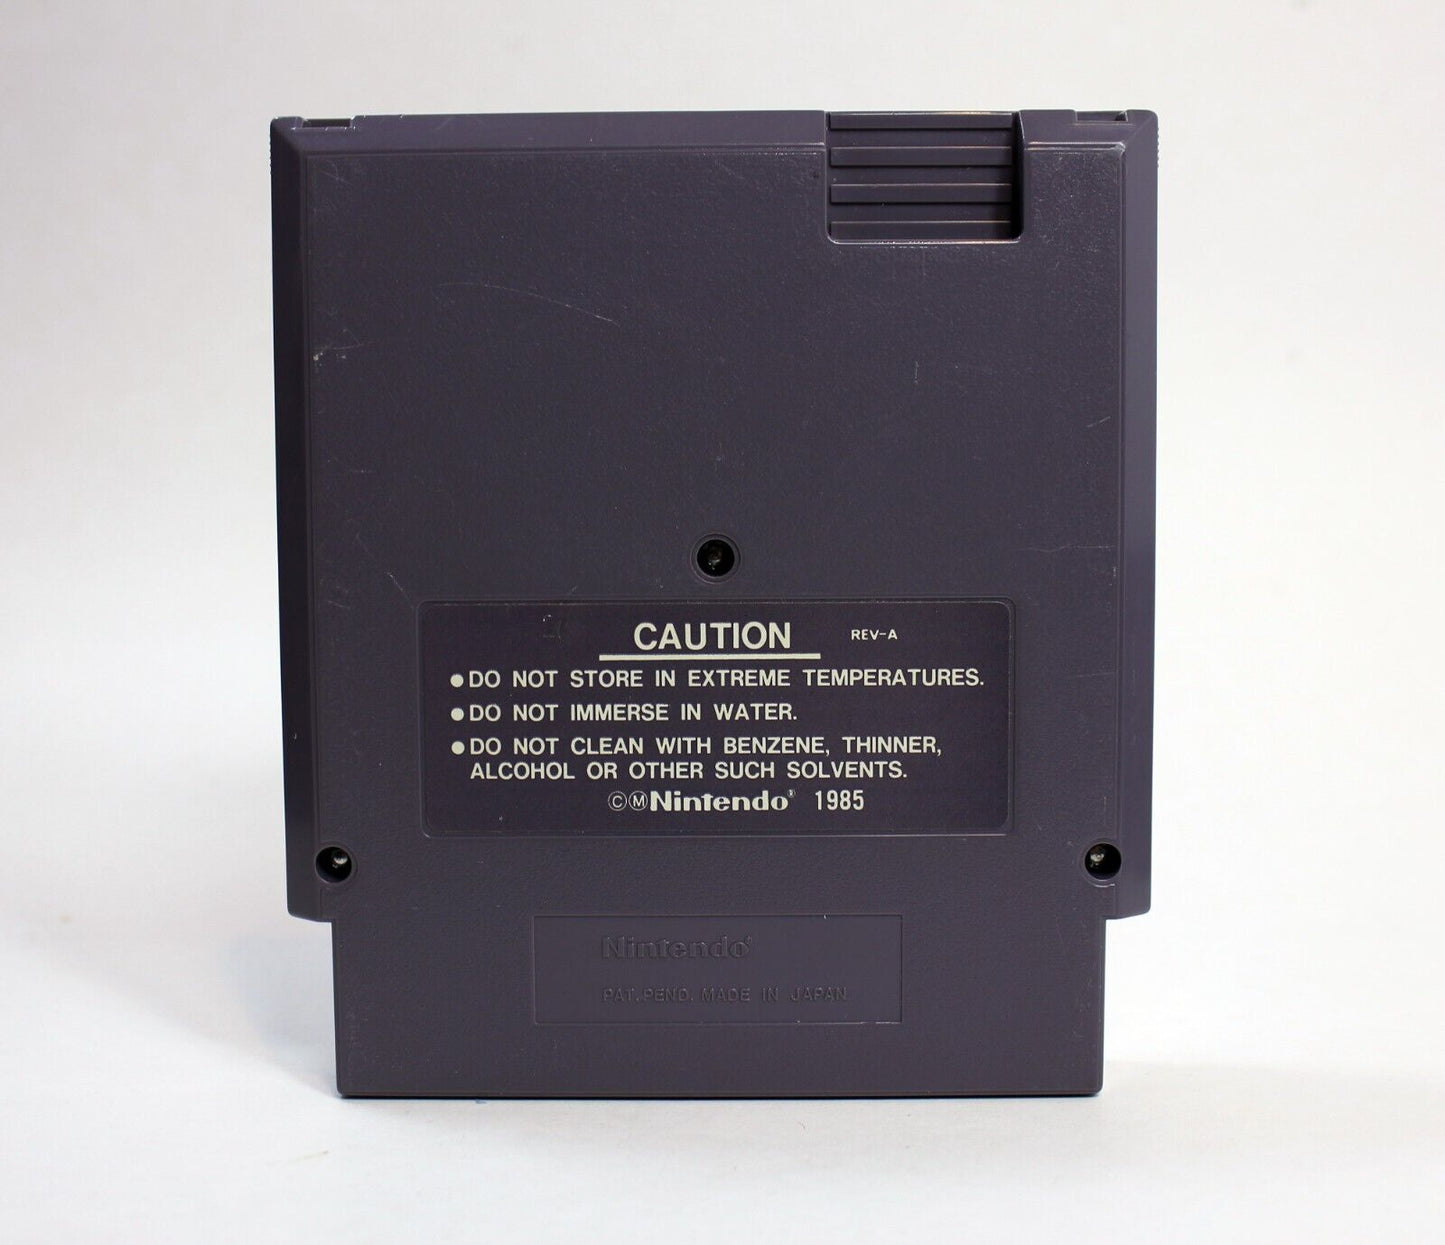 Testris (NES, 1989) U.S. Release